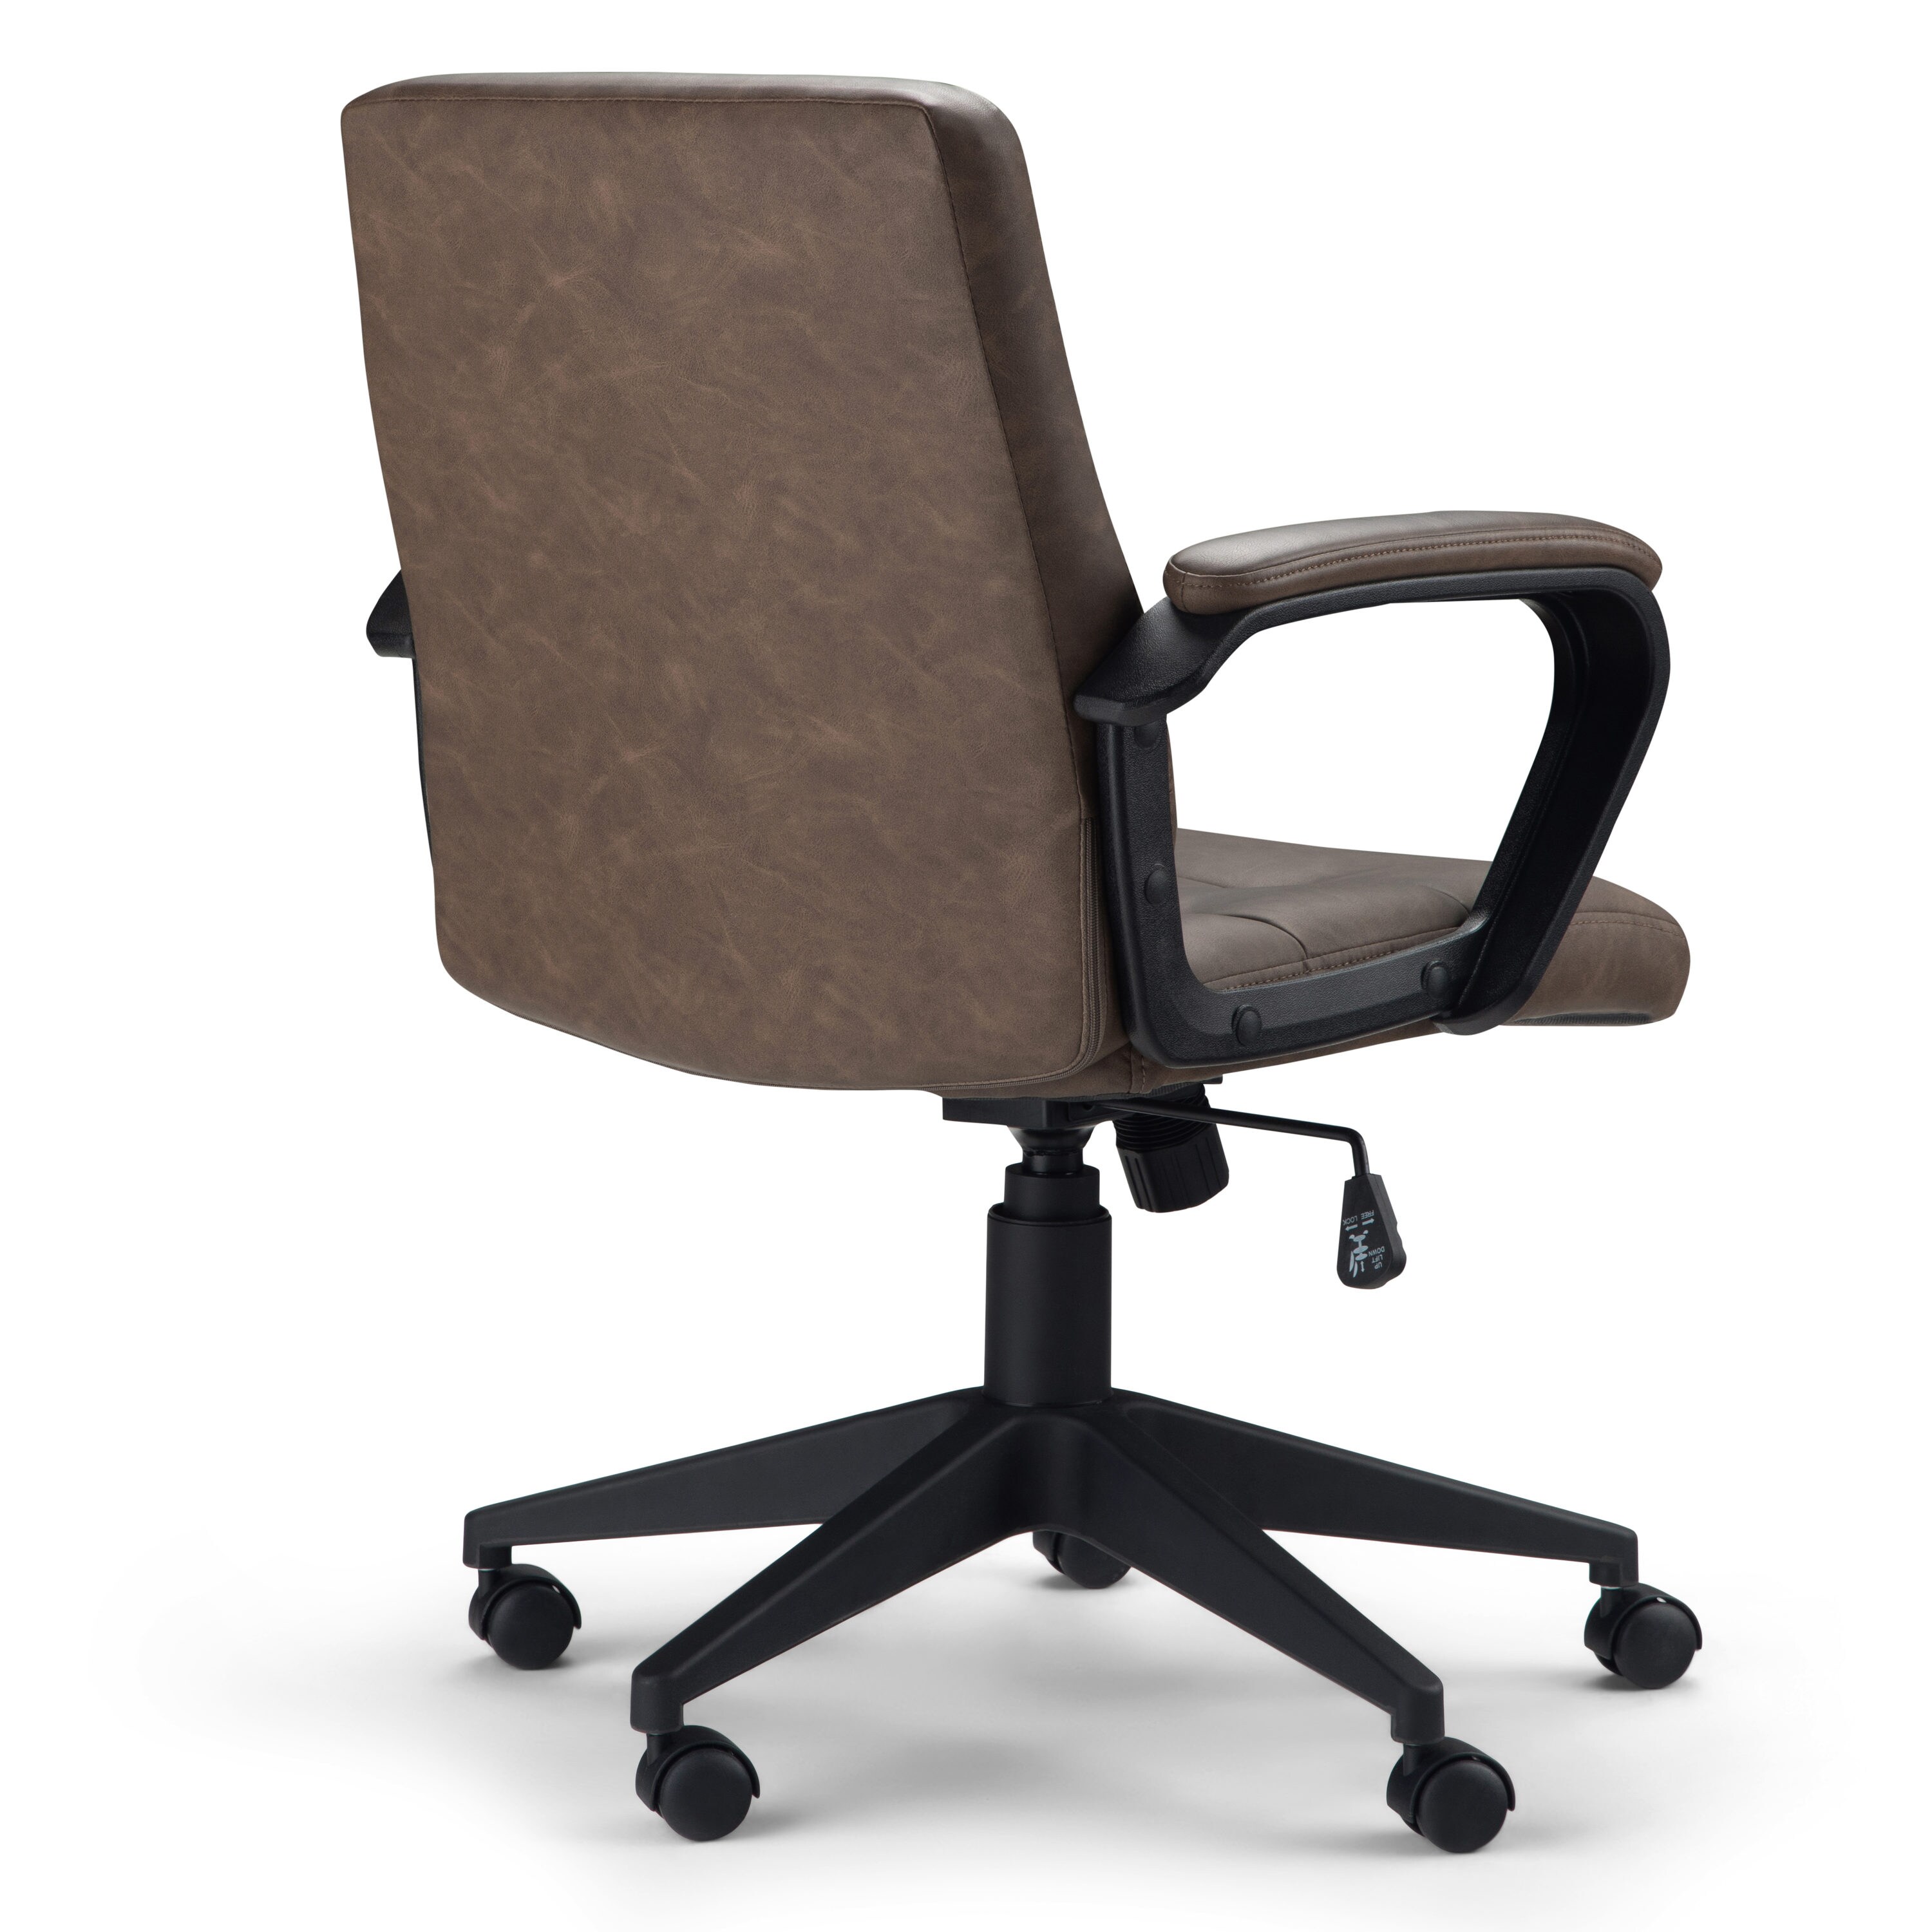 Simpli Home AXCOCHR-06 Prescott Swivel Adjustable Executive Computer C Spring Office Chair in Light Mist Grey 